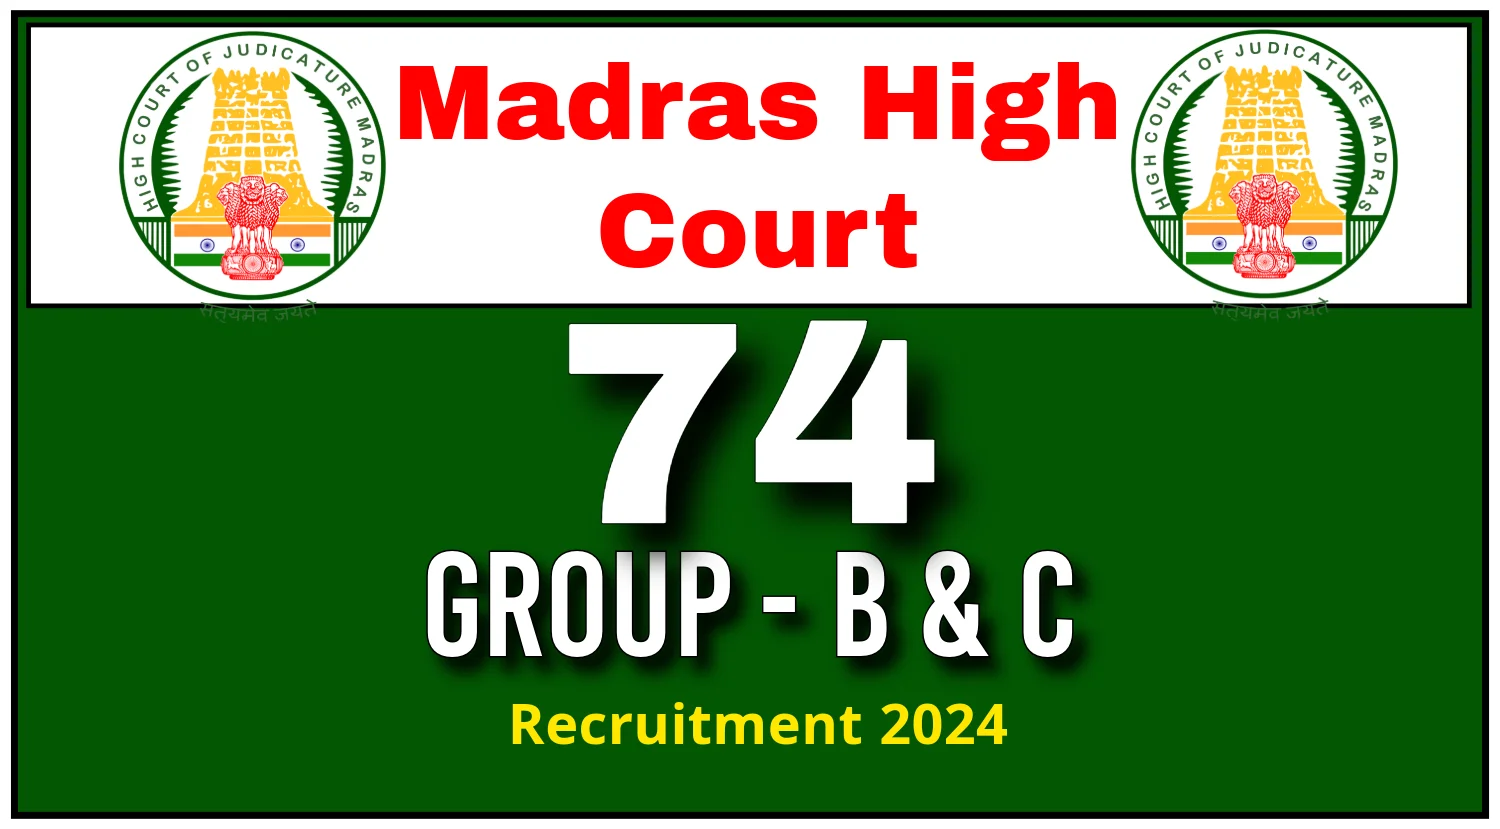 Madras High Court (MHC) Recruitment 2024 Notification